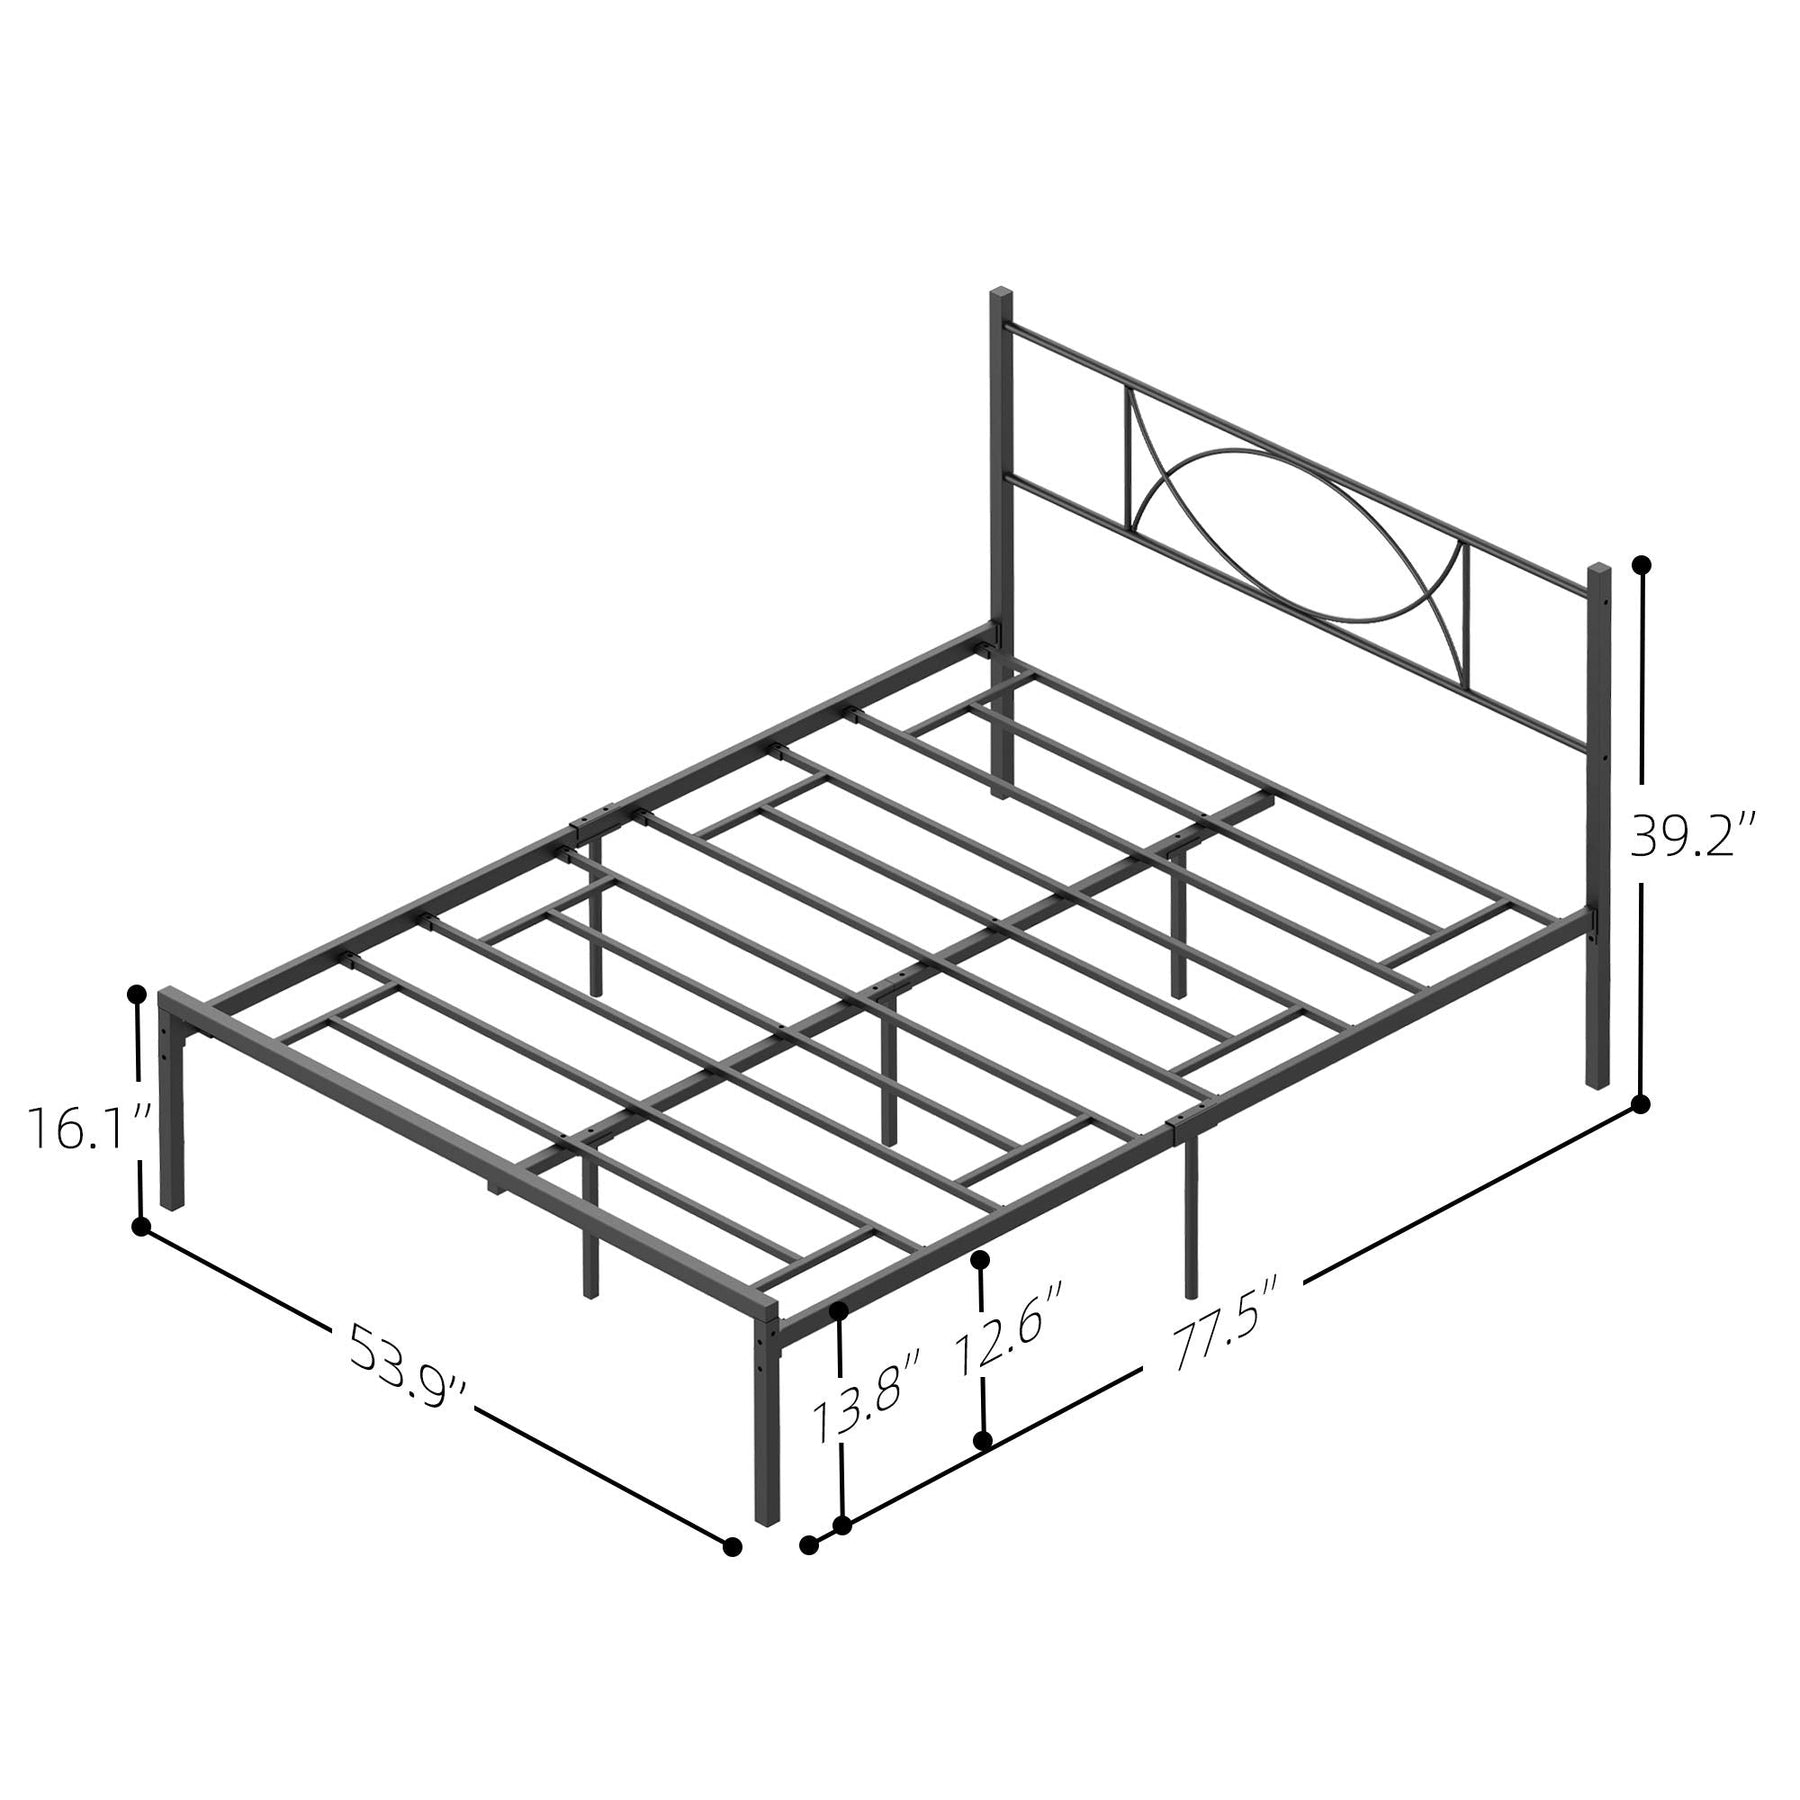 IDEALHOUSE Metal Platform Bed Frame with Sturdy Steel Bed Slats - Full Size